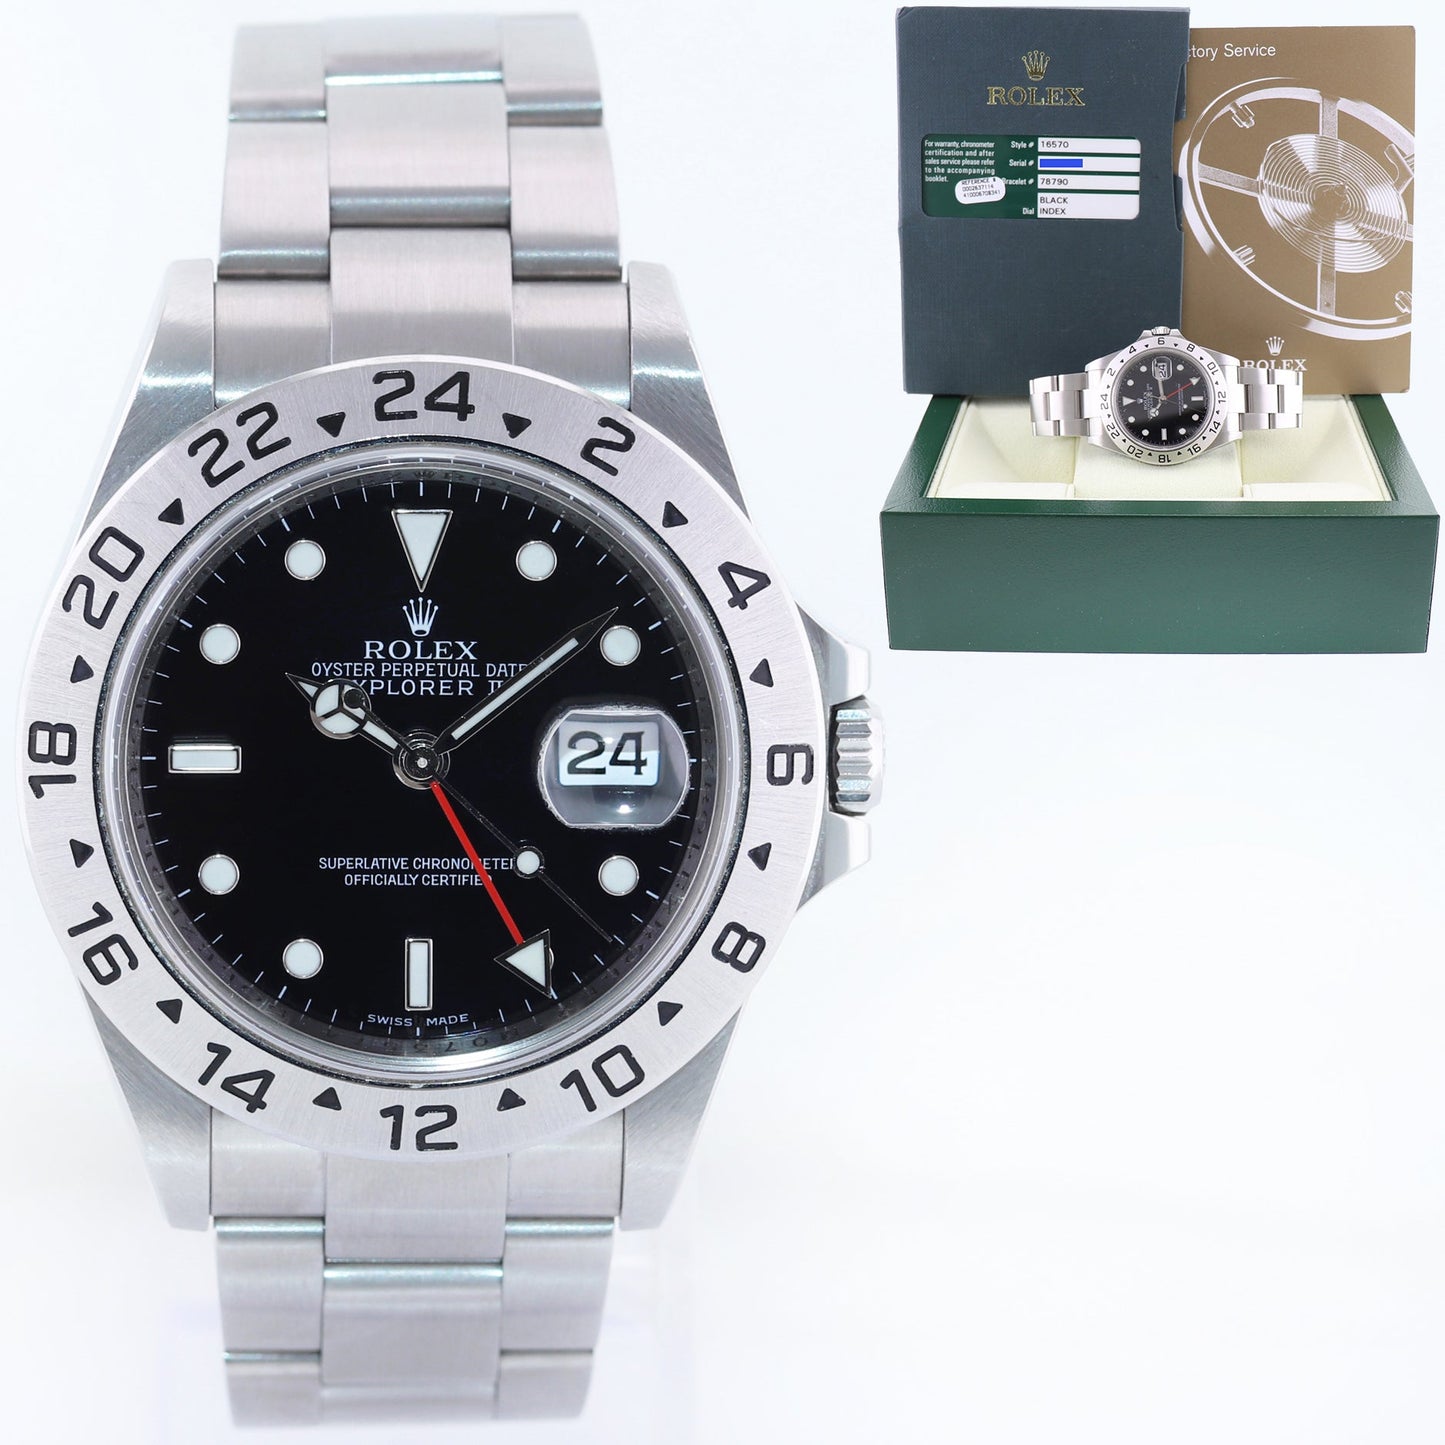 2008 PAPERS Rolex 16570 Steel 3186 movement Explorer 40mm Watch Box